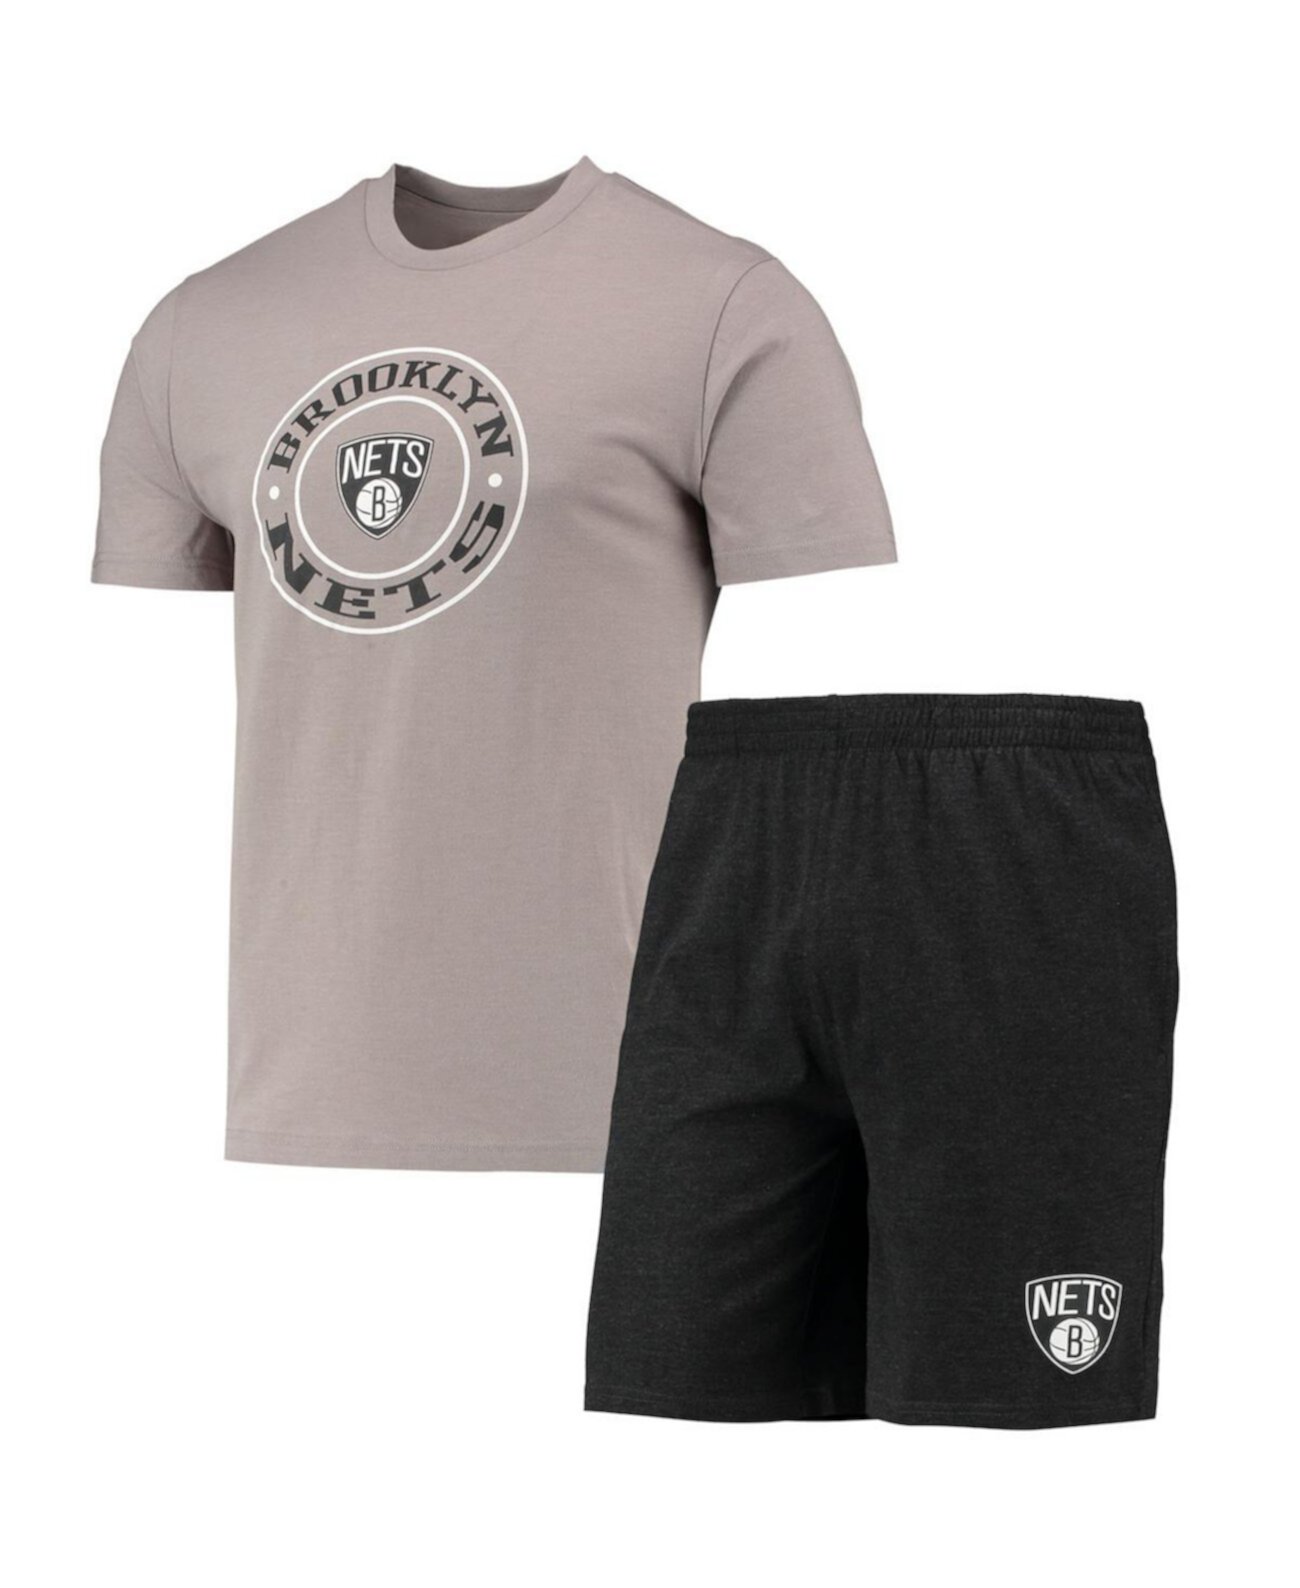 Мужской комплект из футболки и шорт Brooklyn Nets черного и серого цветов для сна Concepts Sport